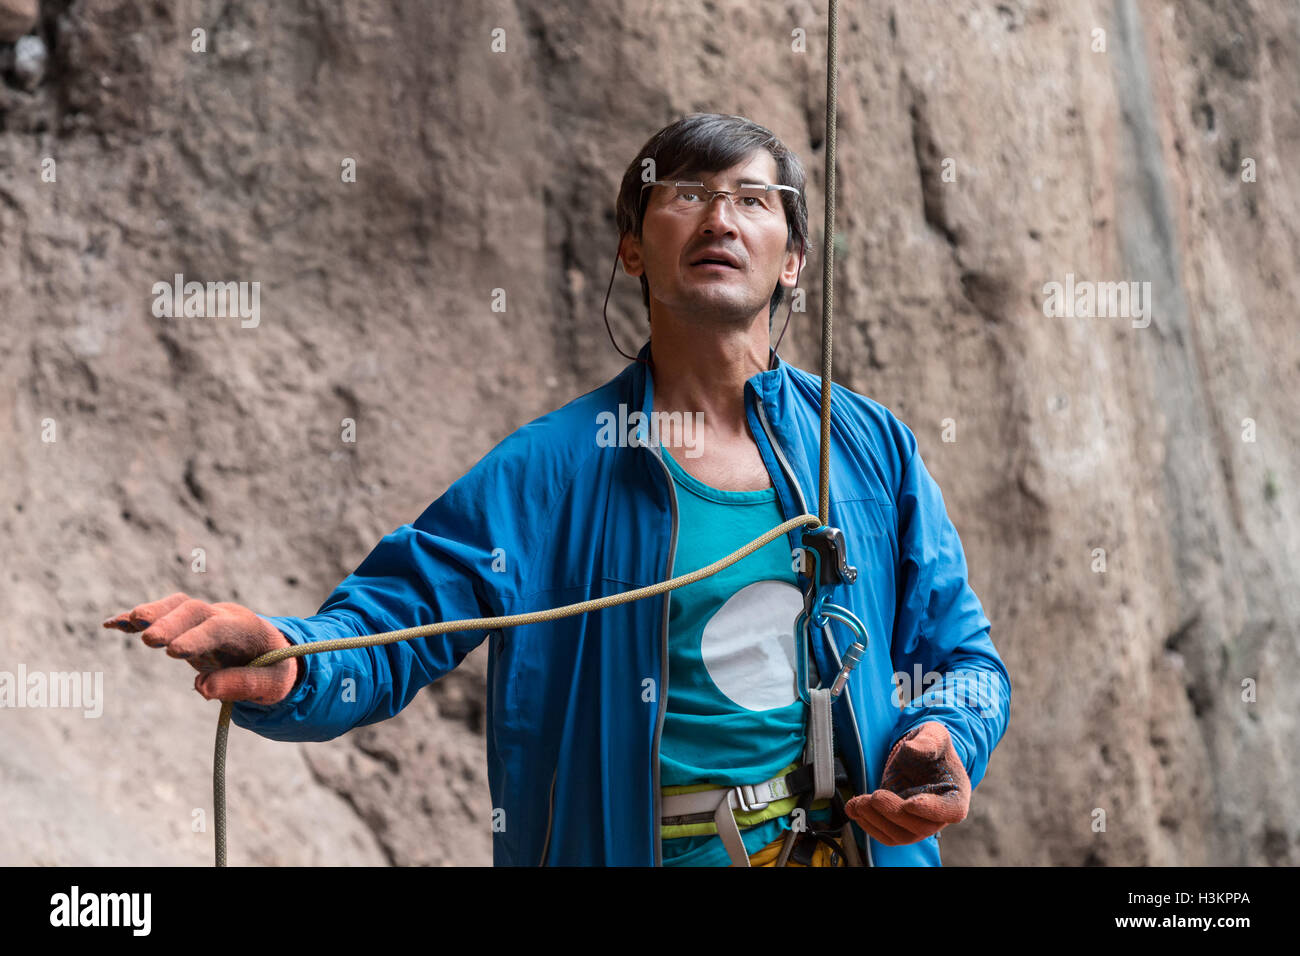 Athlete belays Climber using belaying device and rope Stock Photo